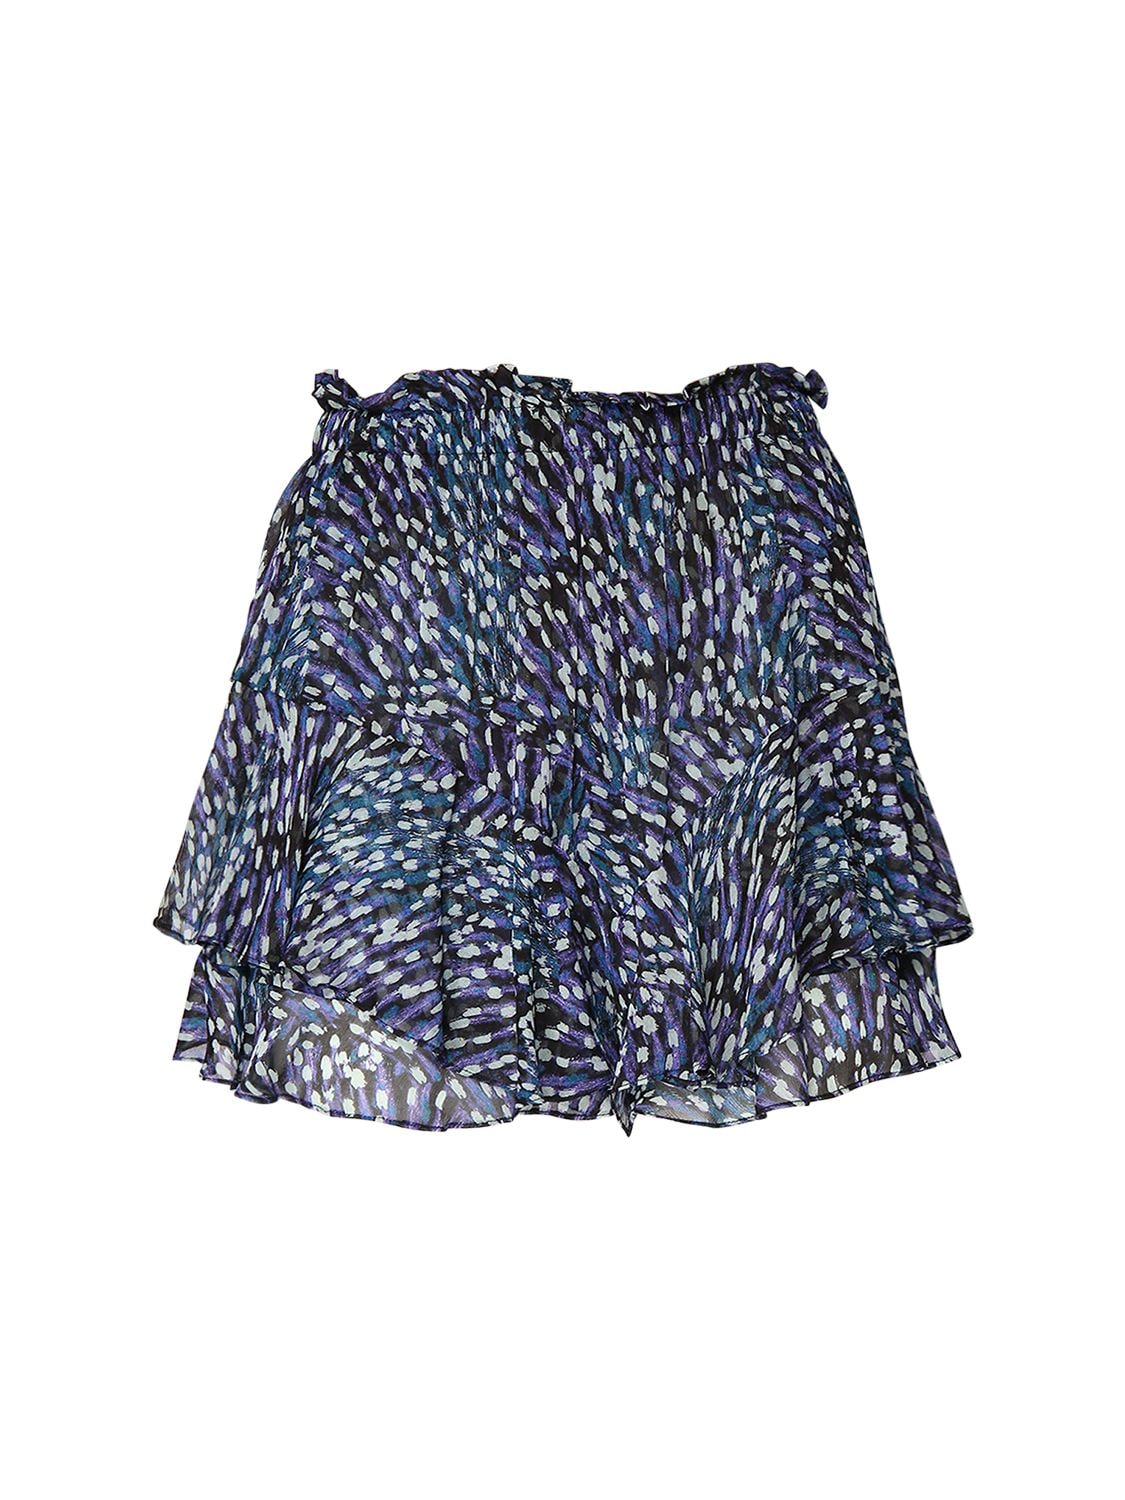 Image of Sornel Printed Viscose Shorts